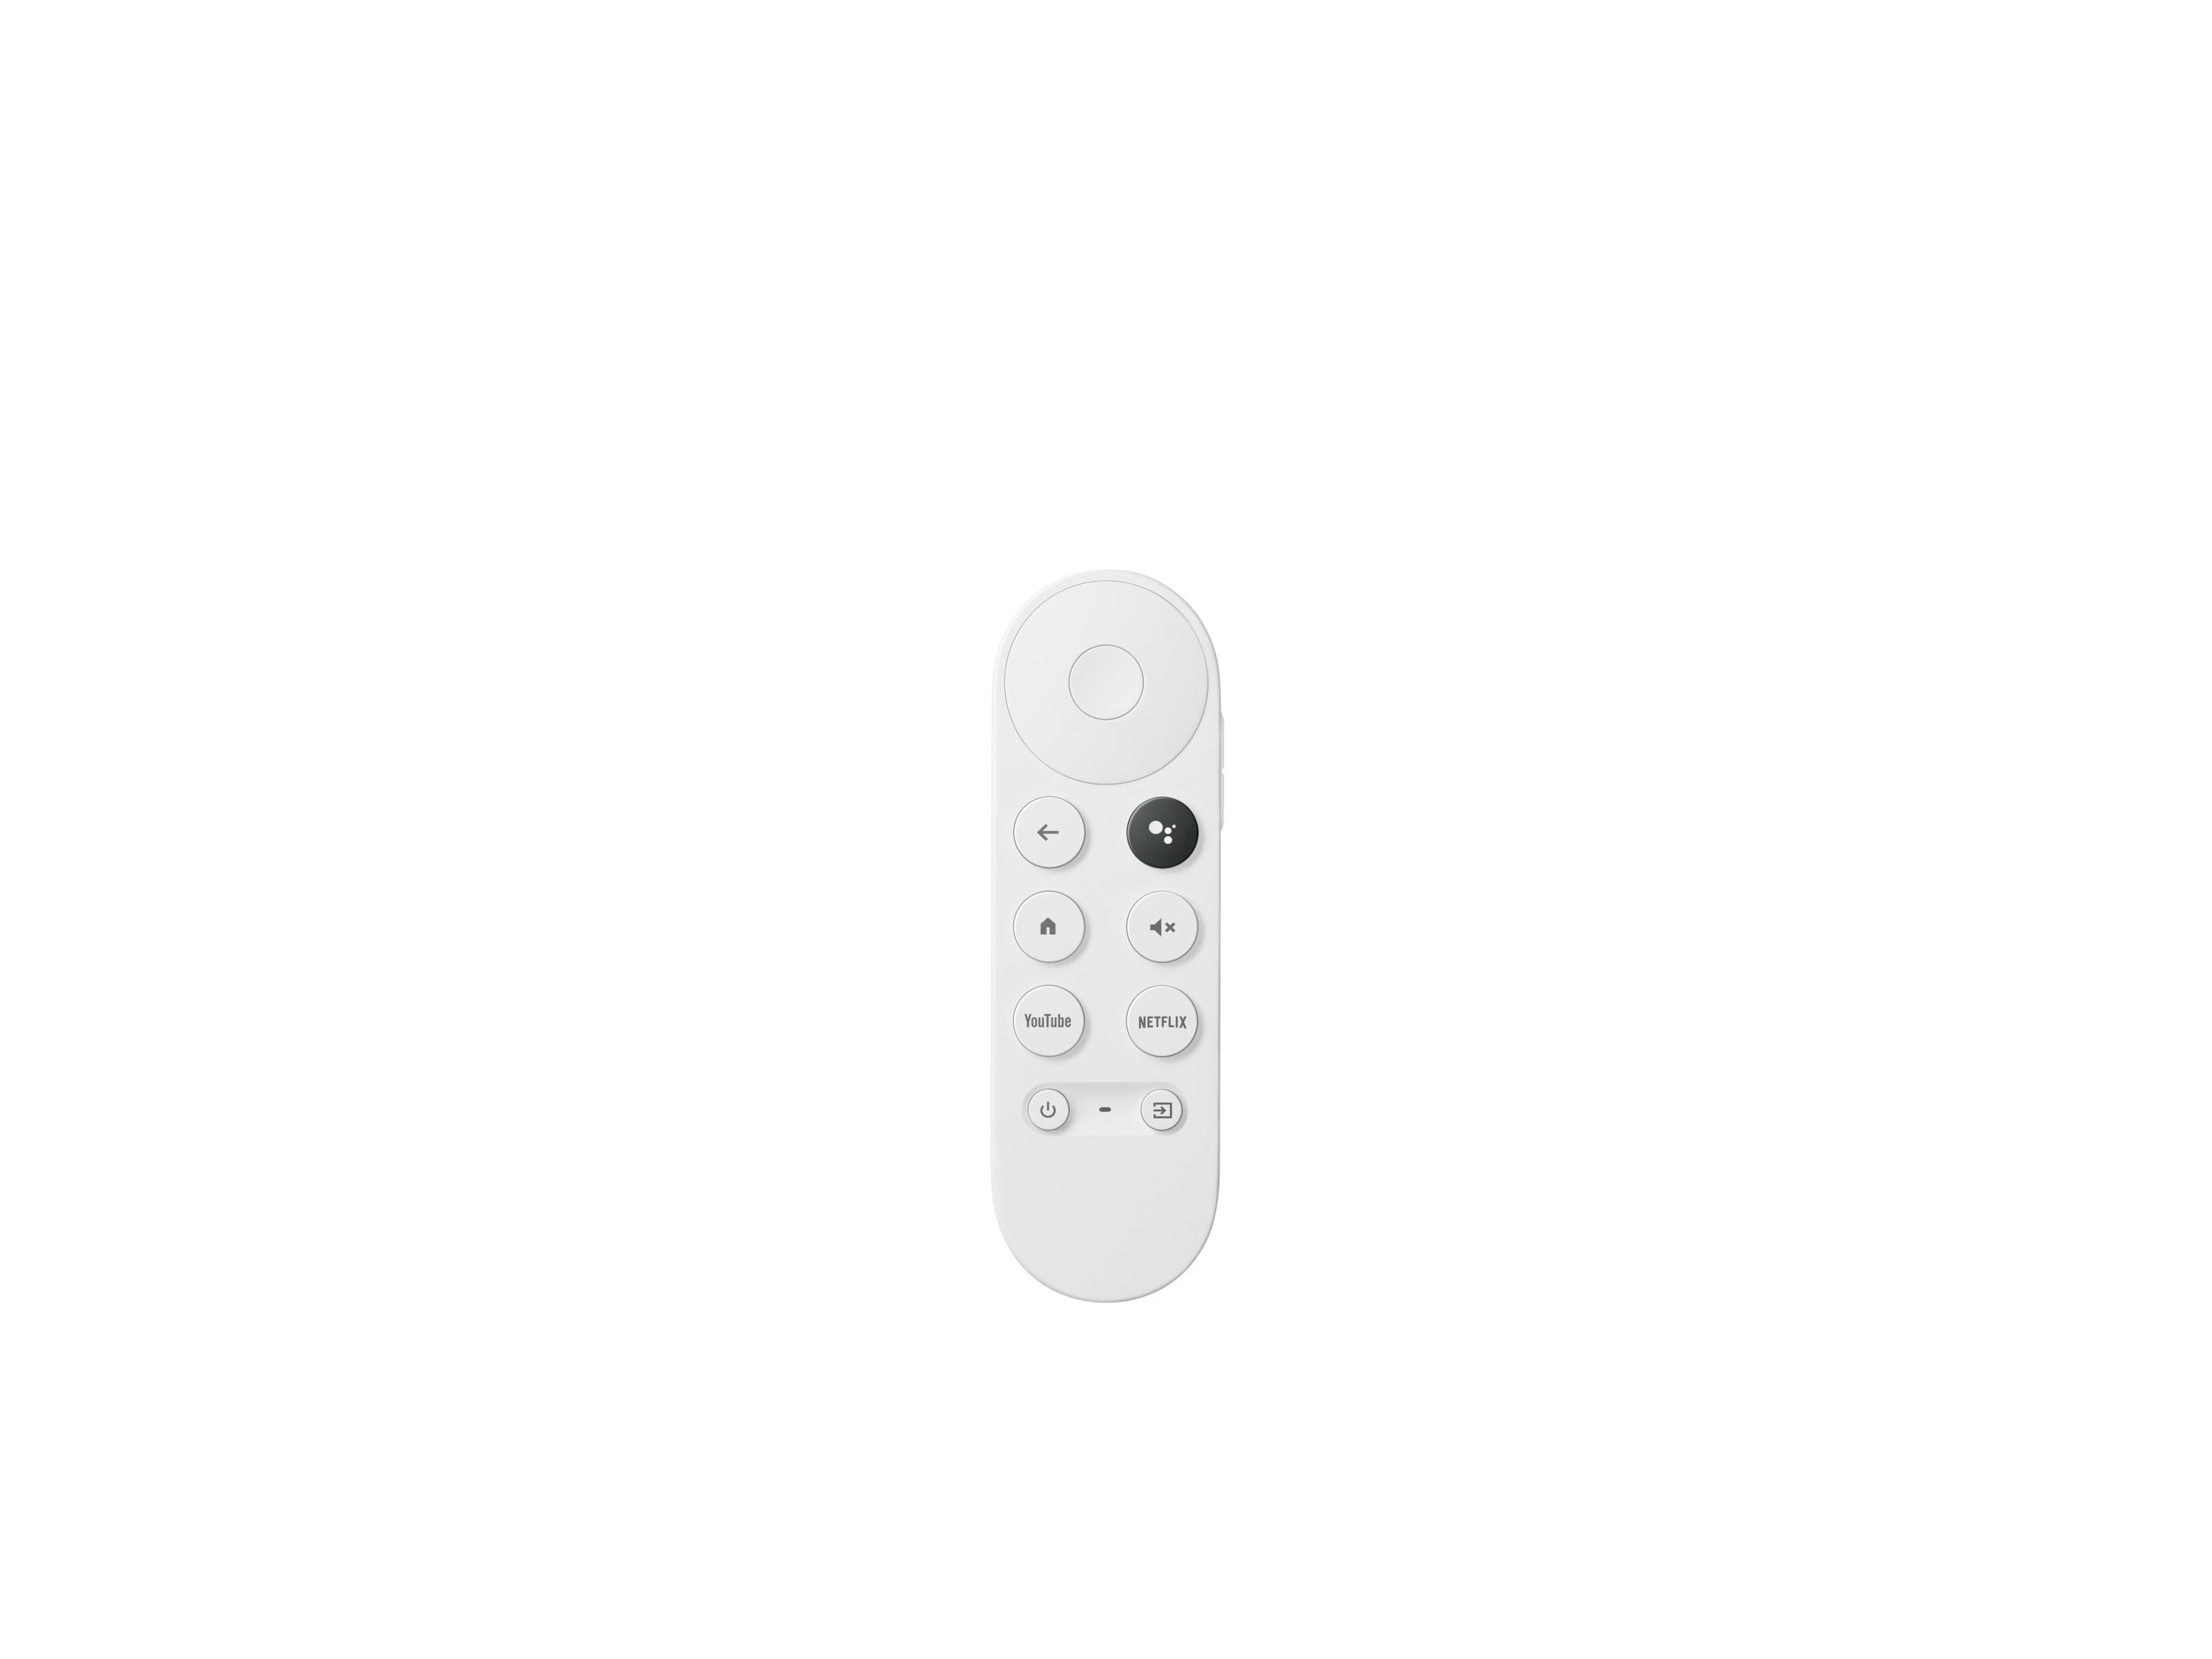 Player, Google Streaming Chromecast mit GOOGLE Schnee (HD) TV